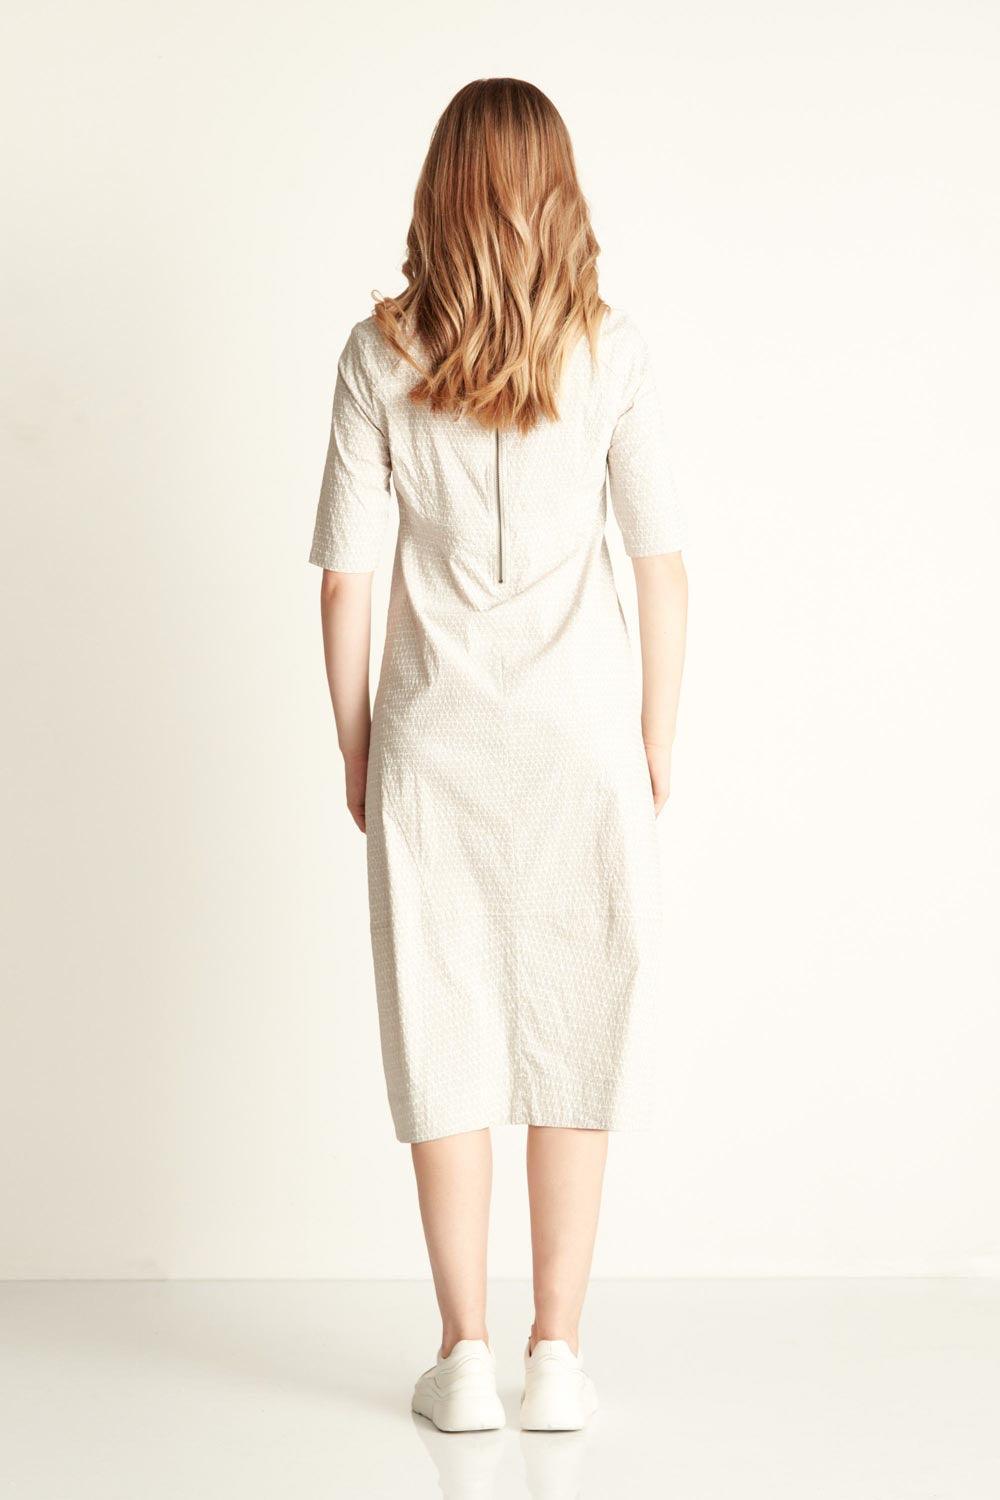 Acrobat Weave Bridge Dress - Pumice/White - Dress VERGE